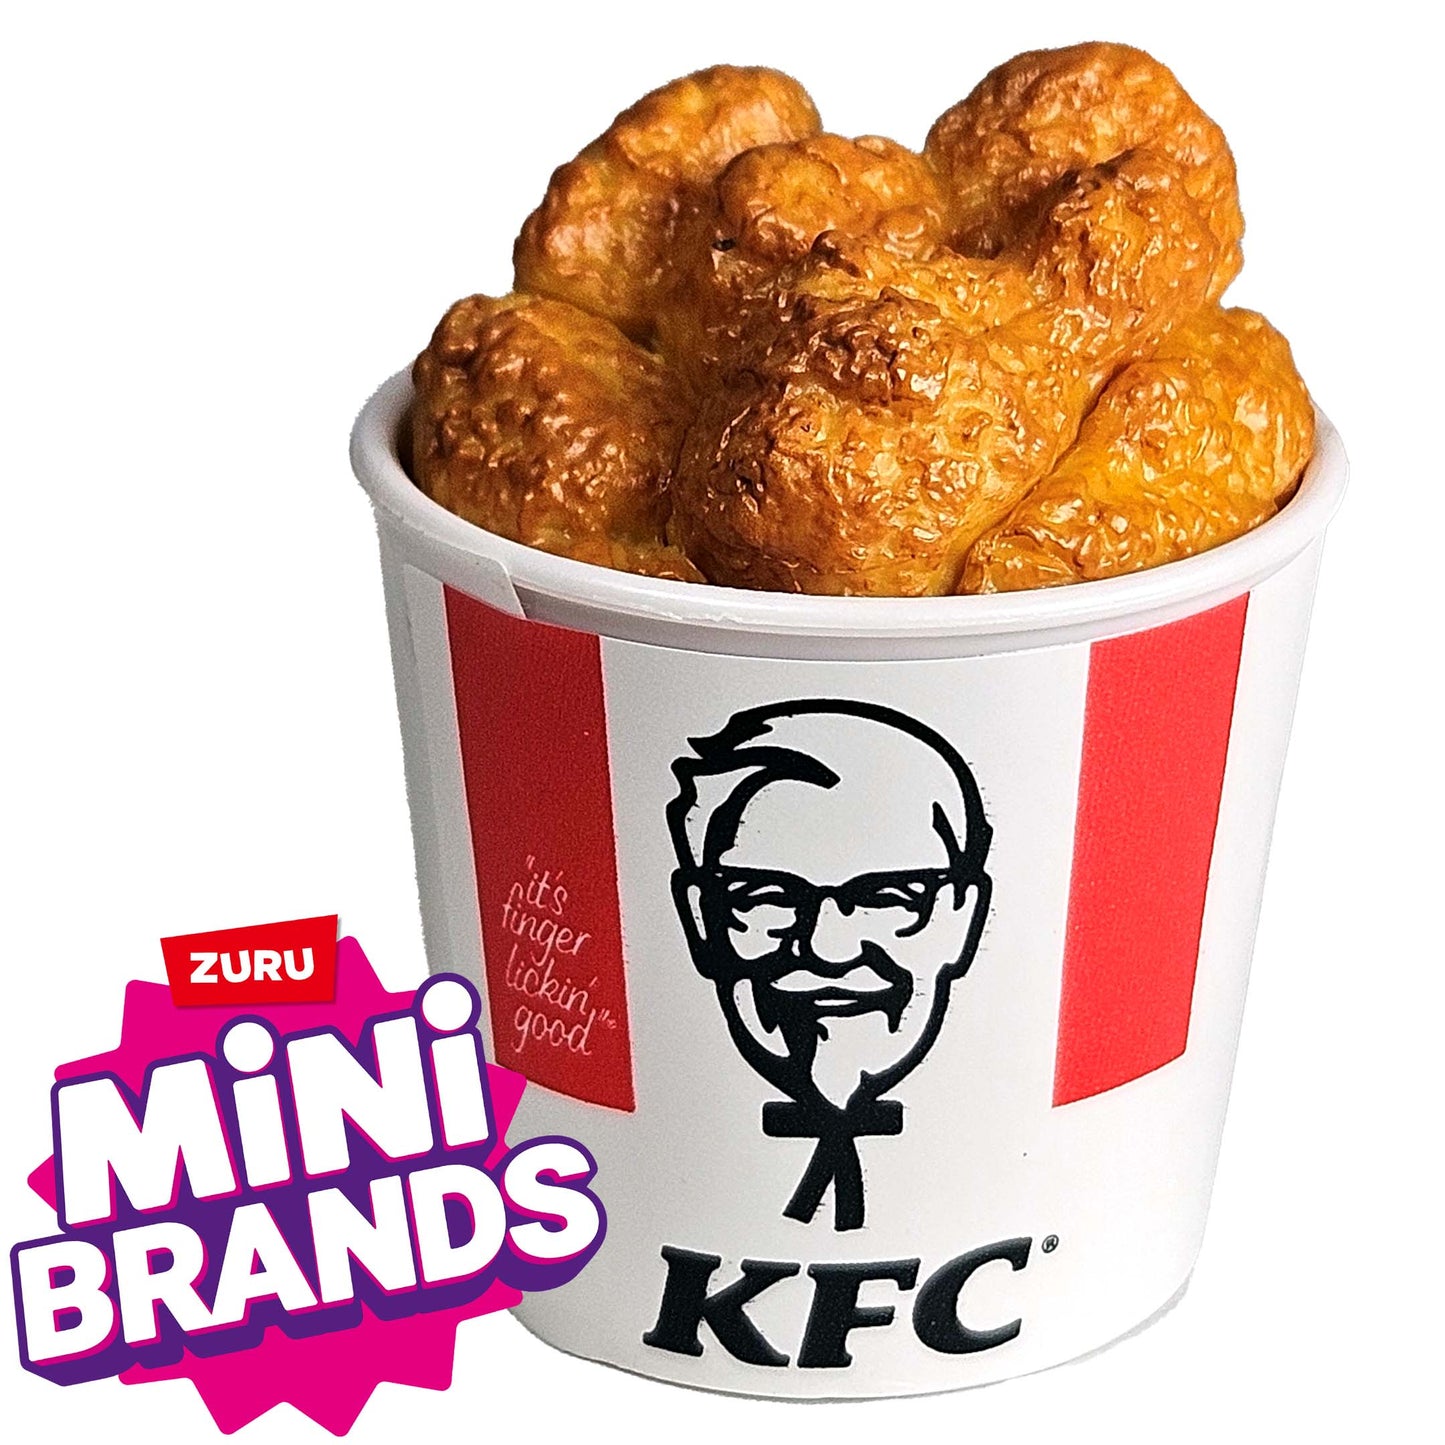 KFC Mini Brands - Choose Yours